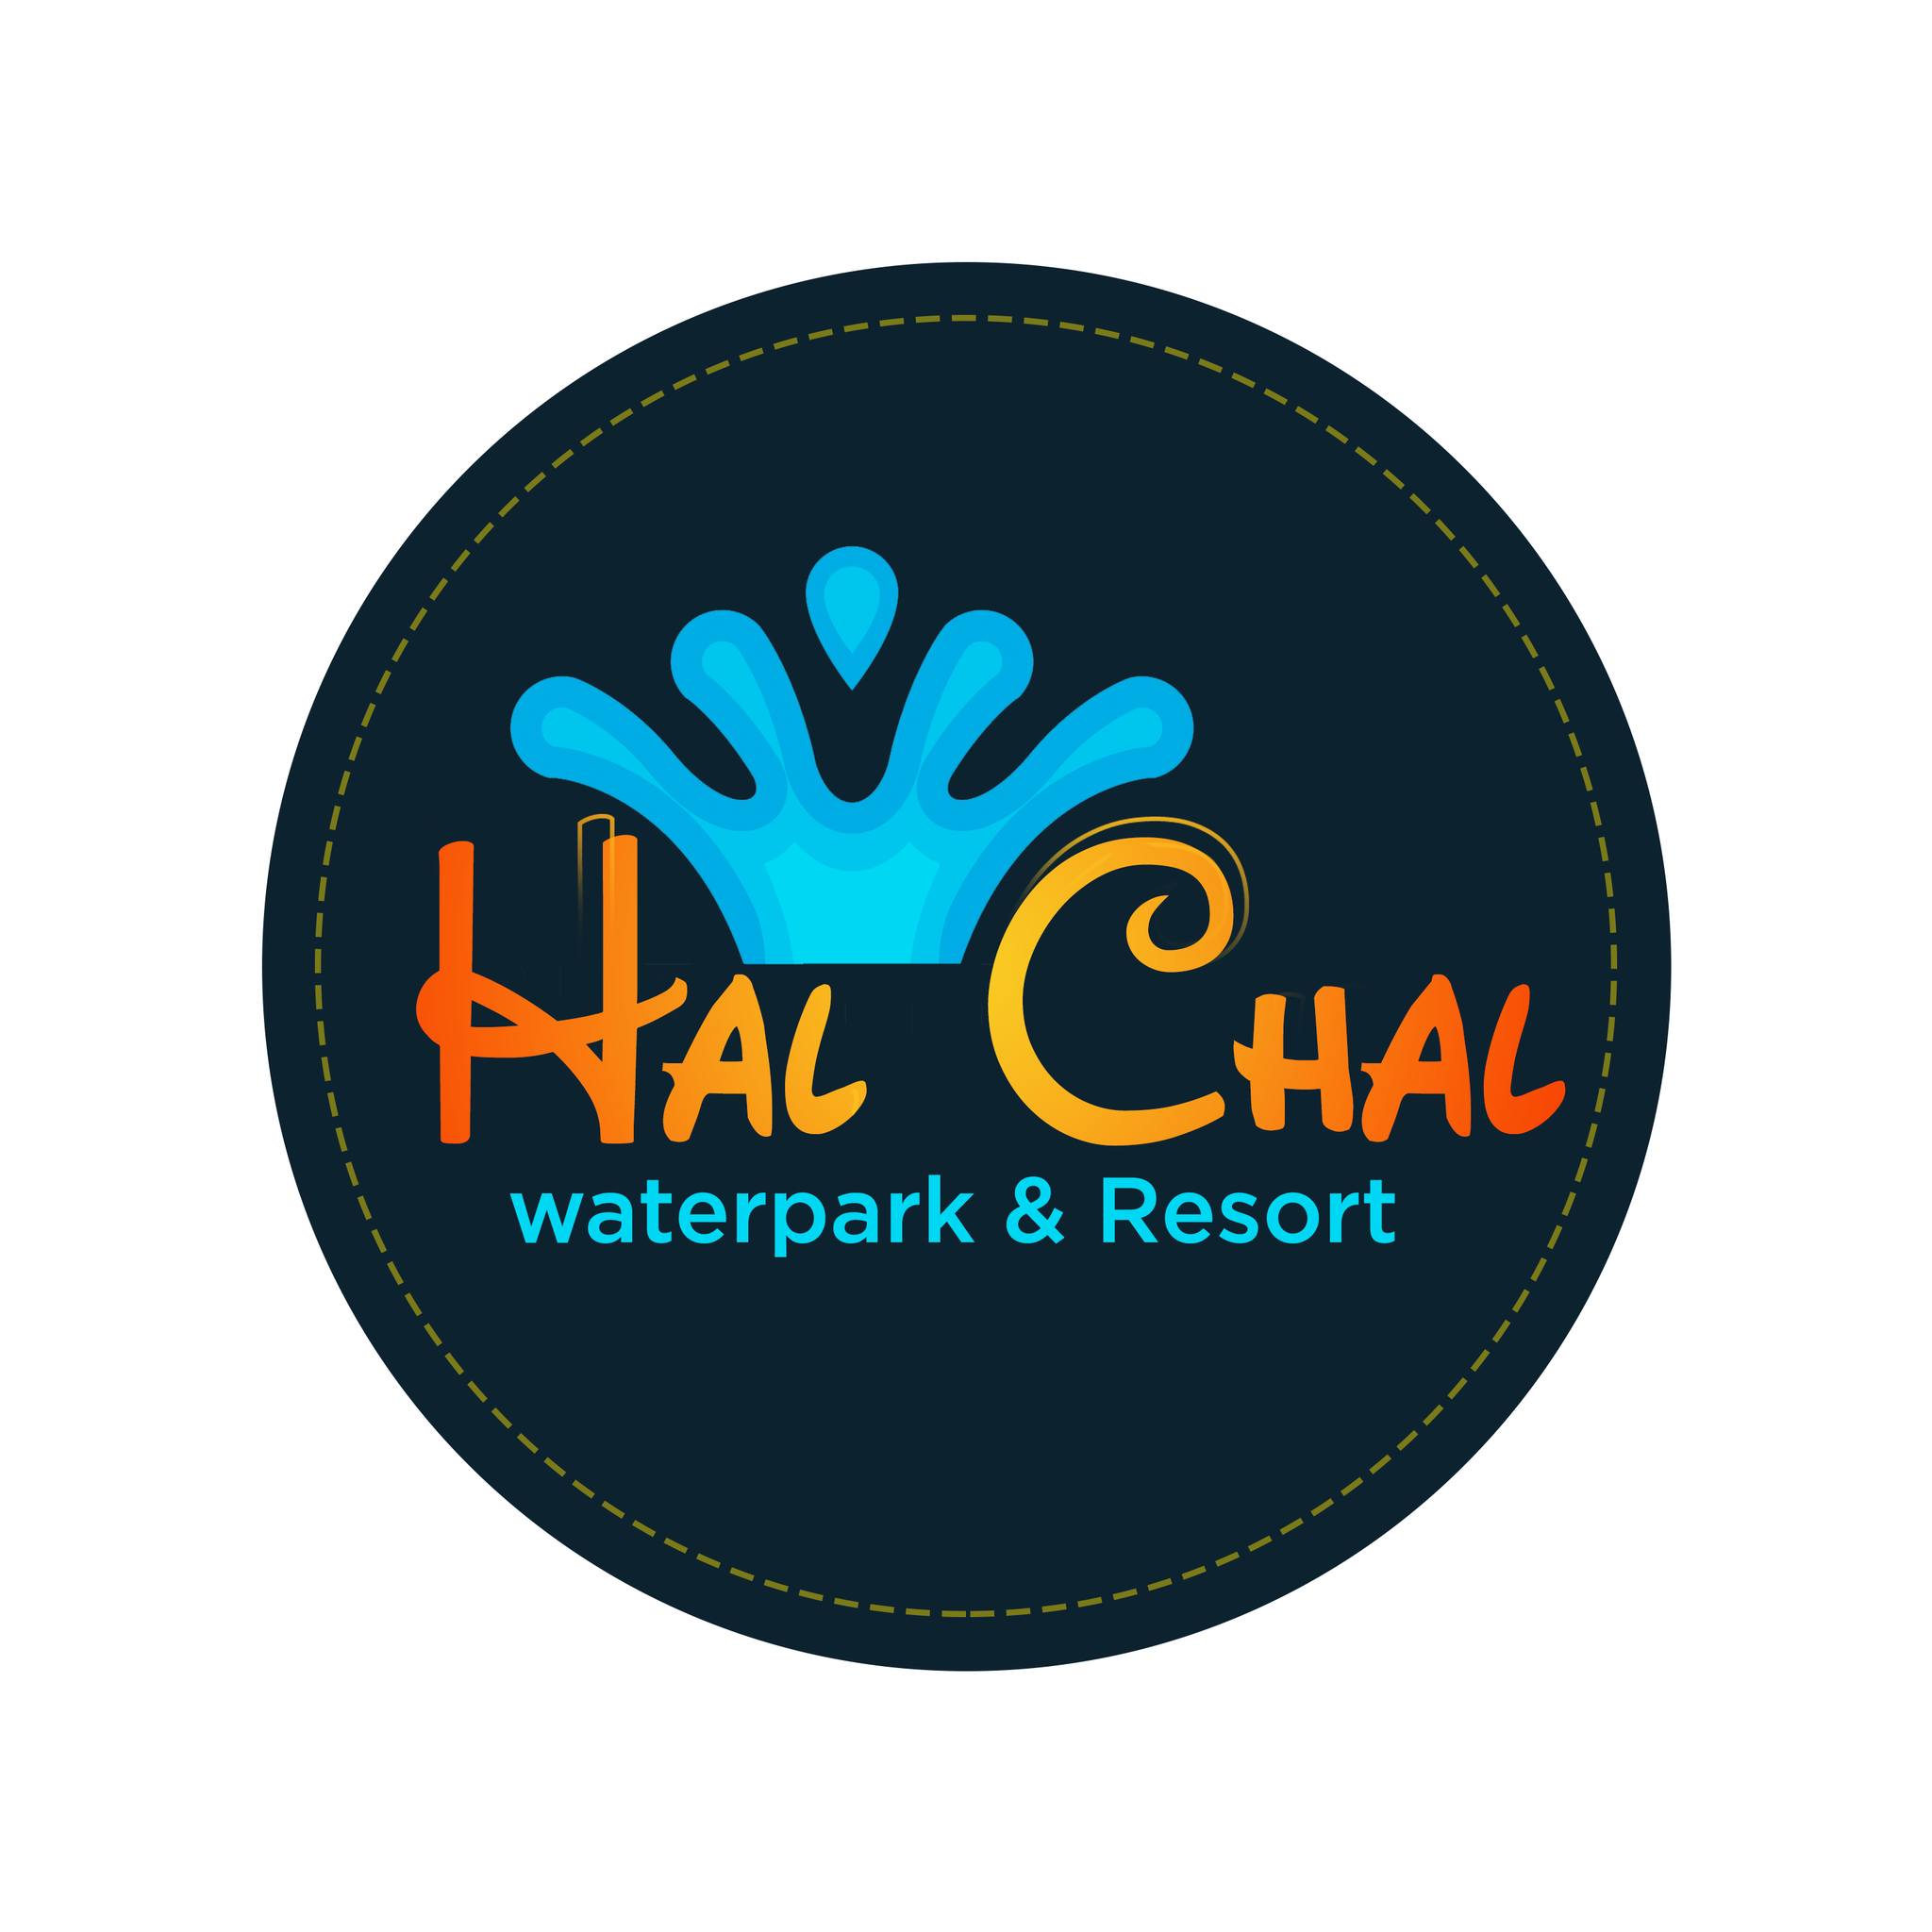 Halchal Waterpark|Water Park|Entertainment